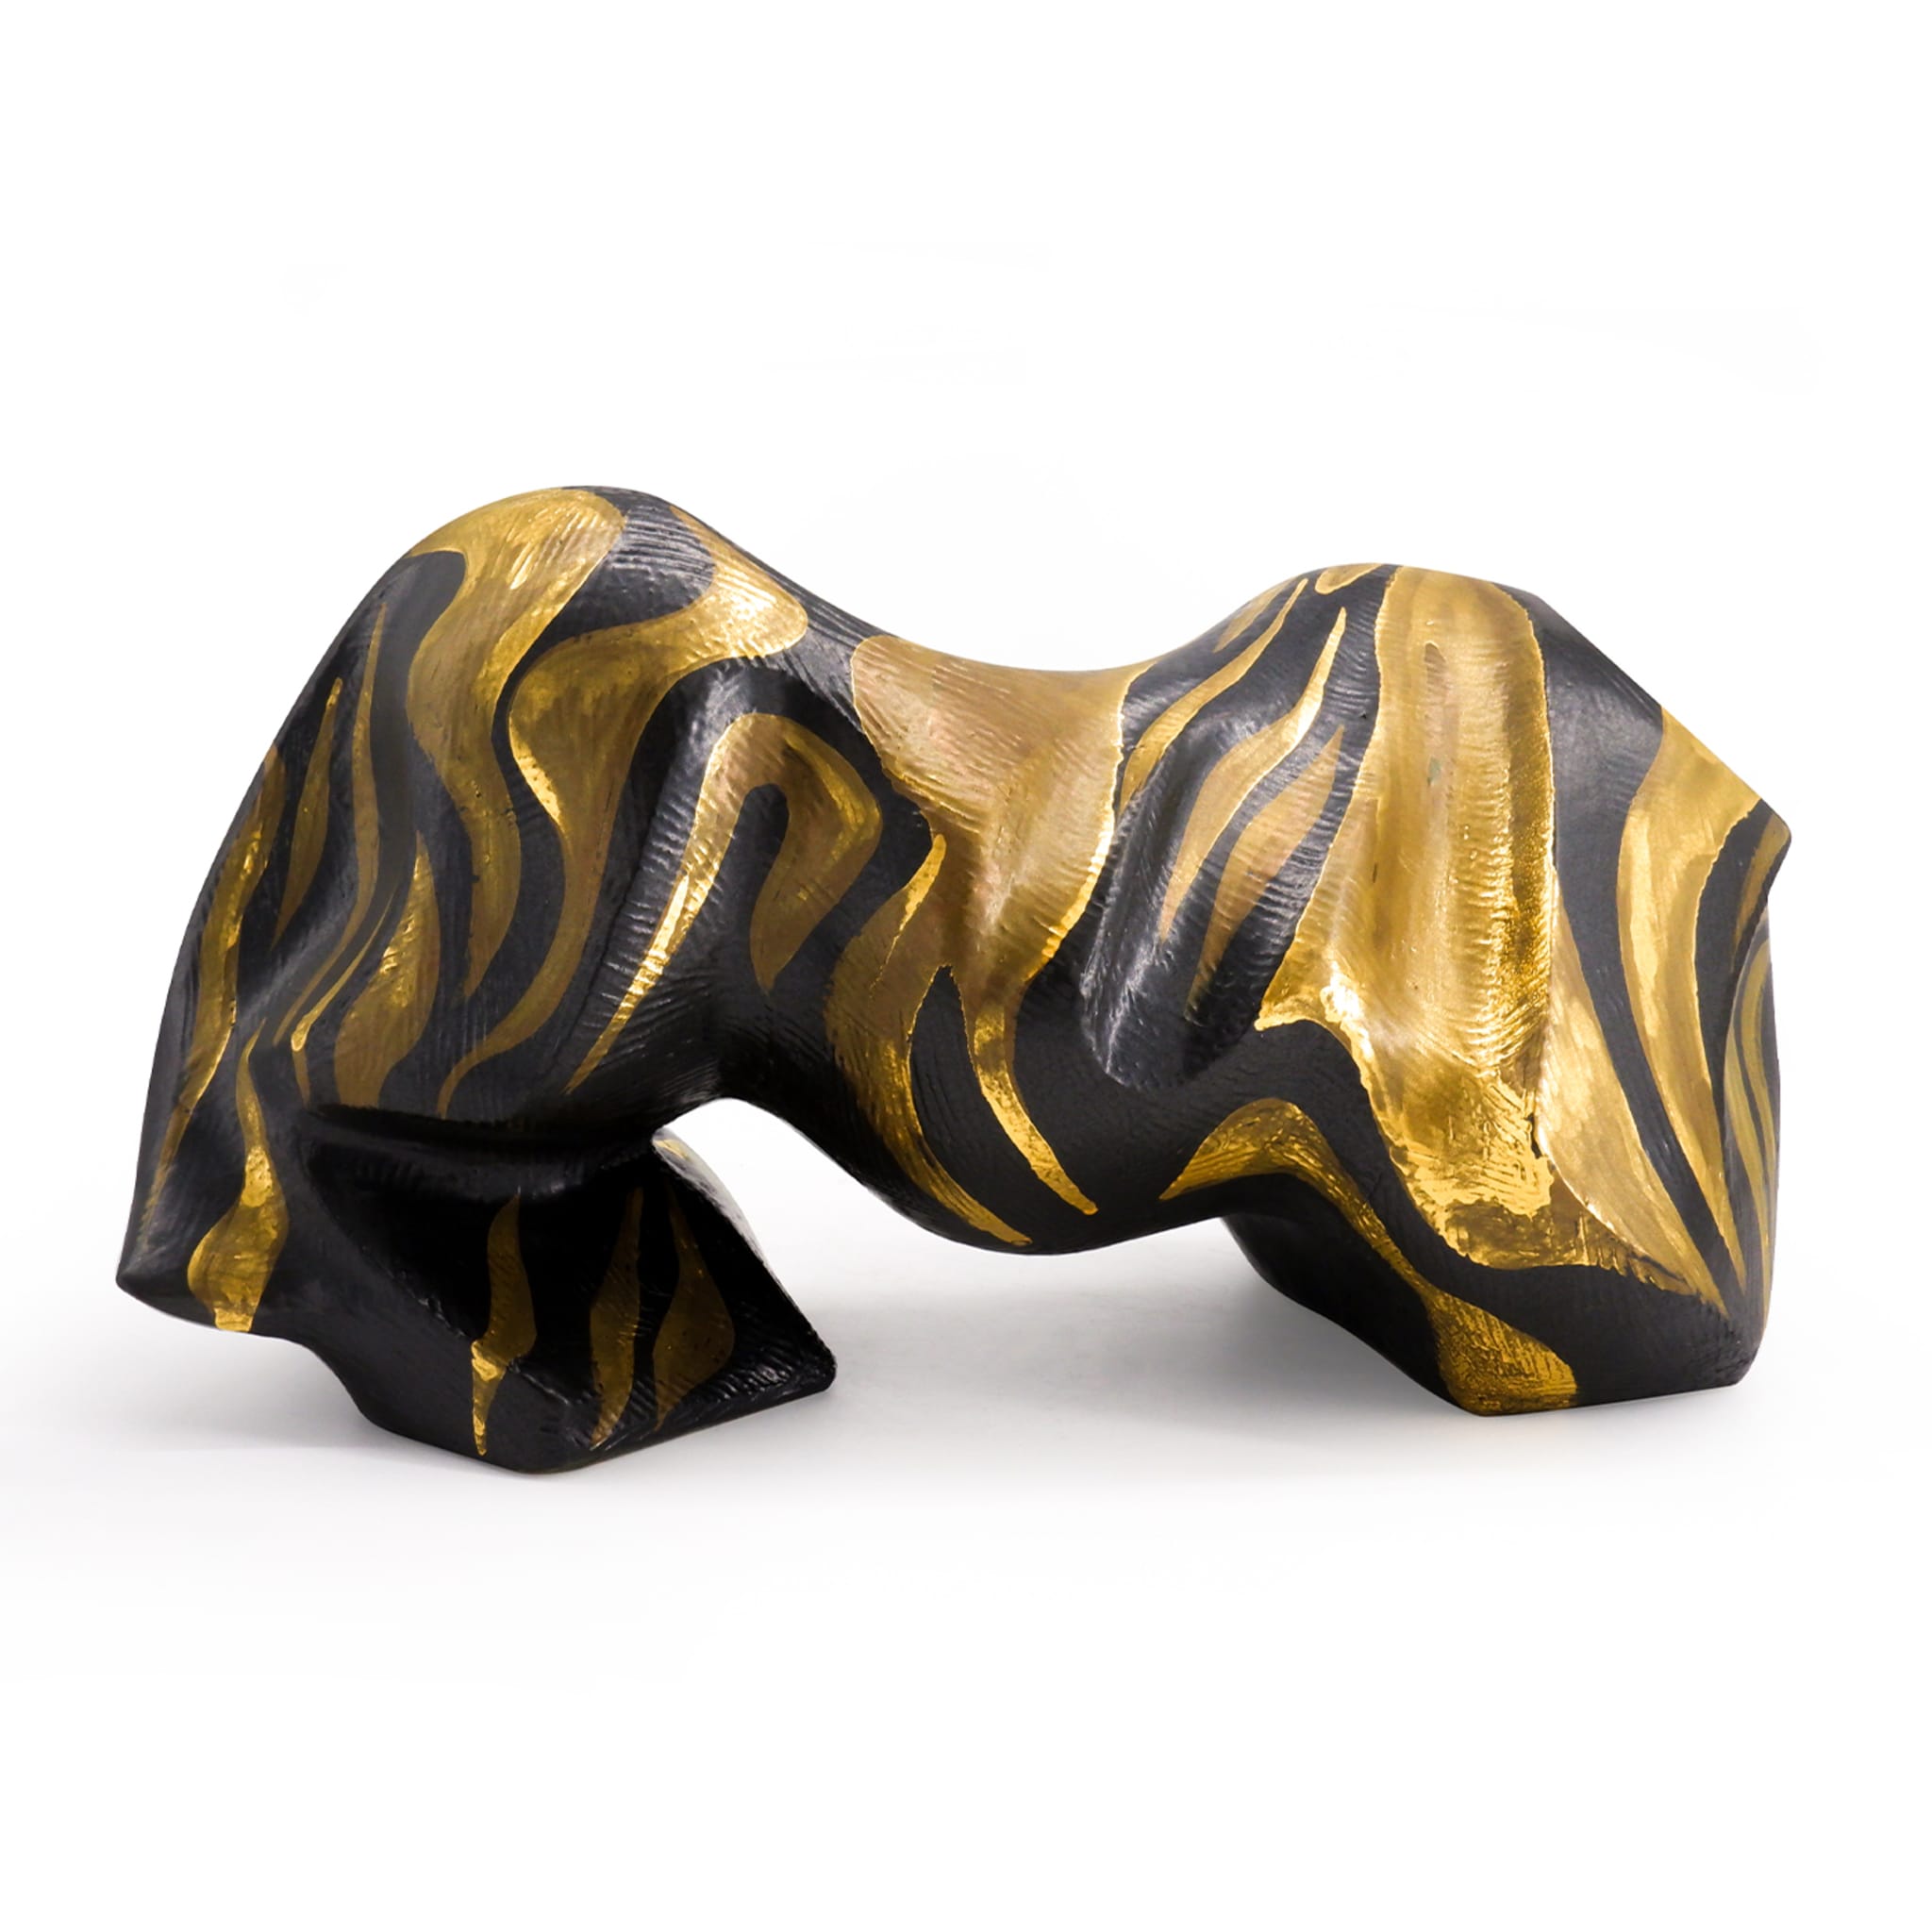 Tora black and gold sculpture - Alternative view 1